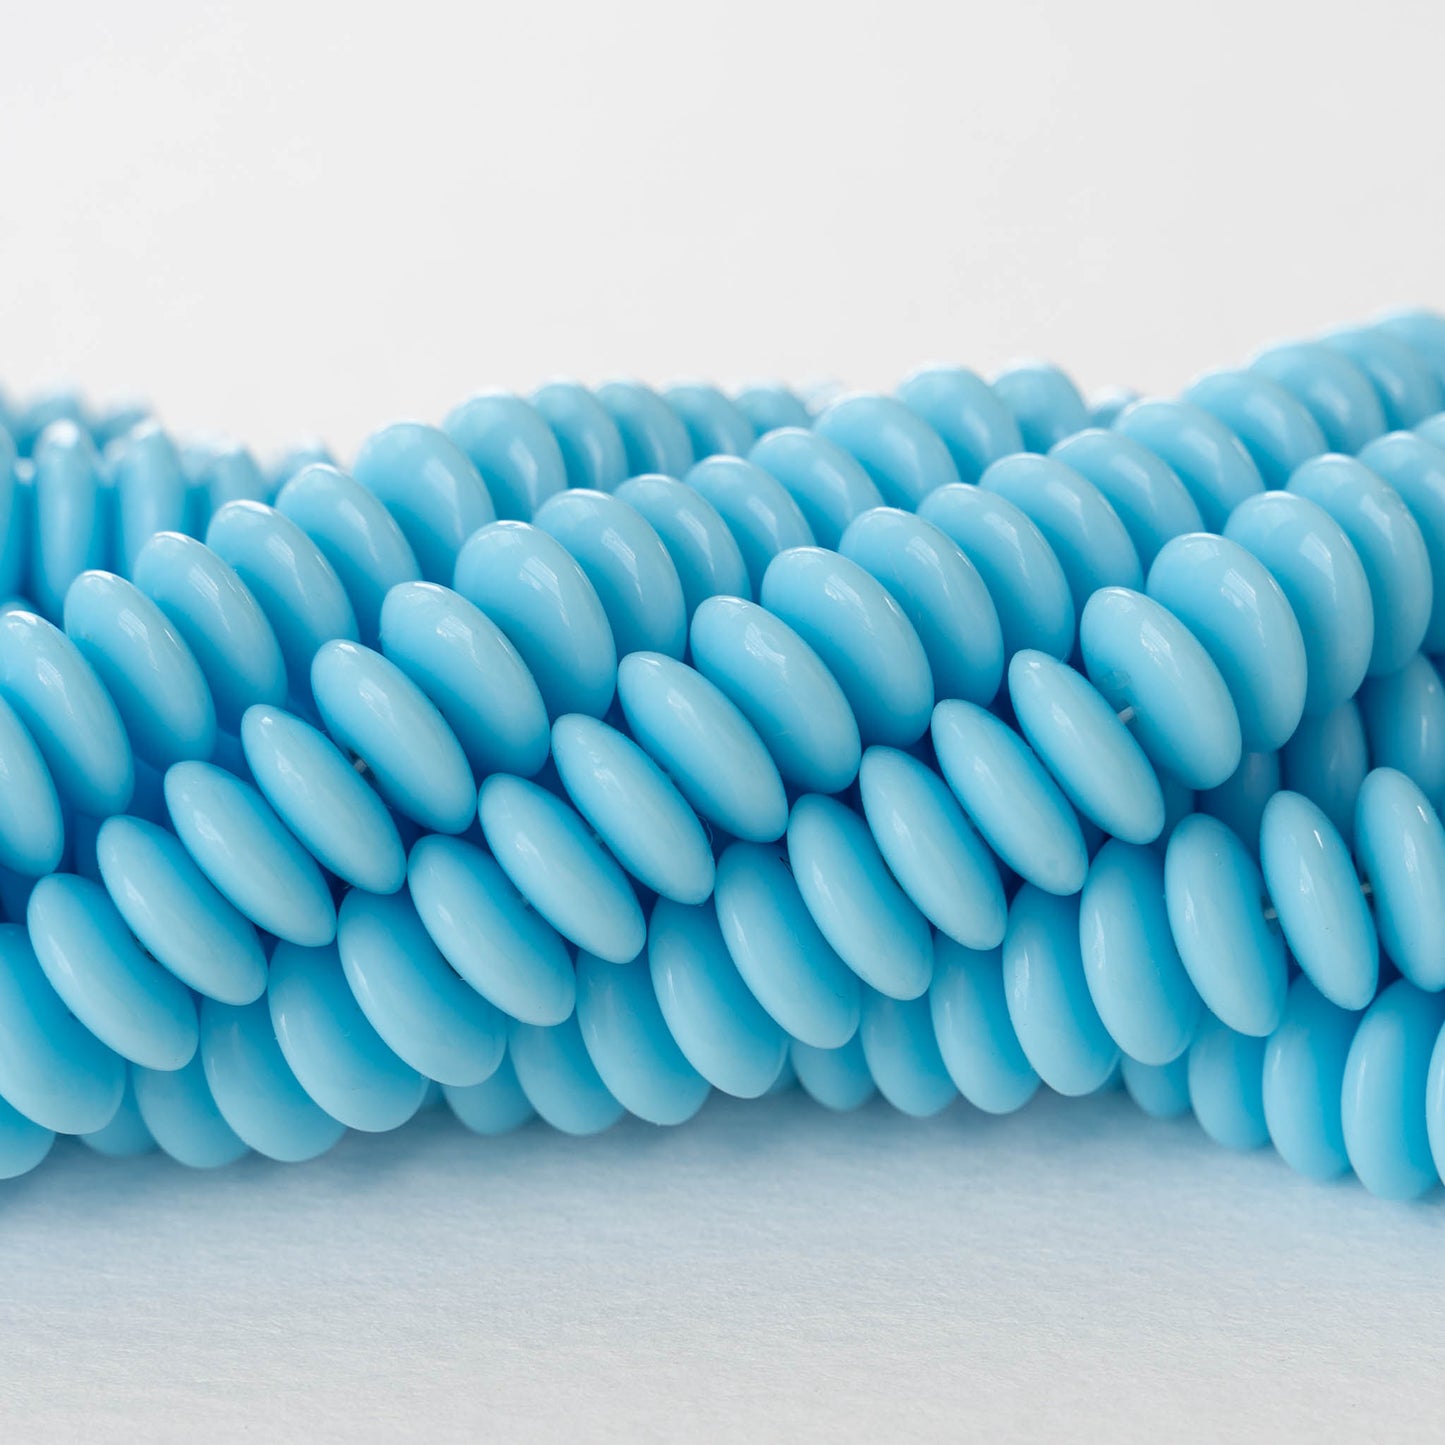 10mm Rondelle Beads - Opaque Light Blue - 30 Beads